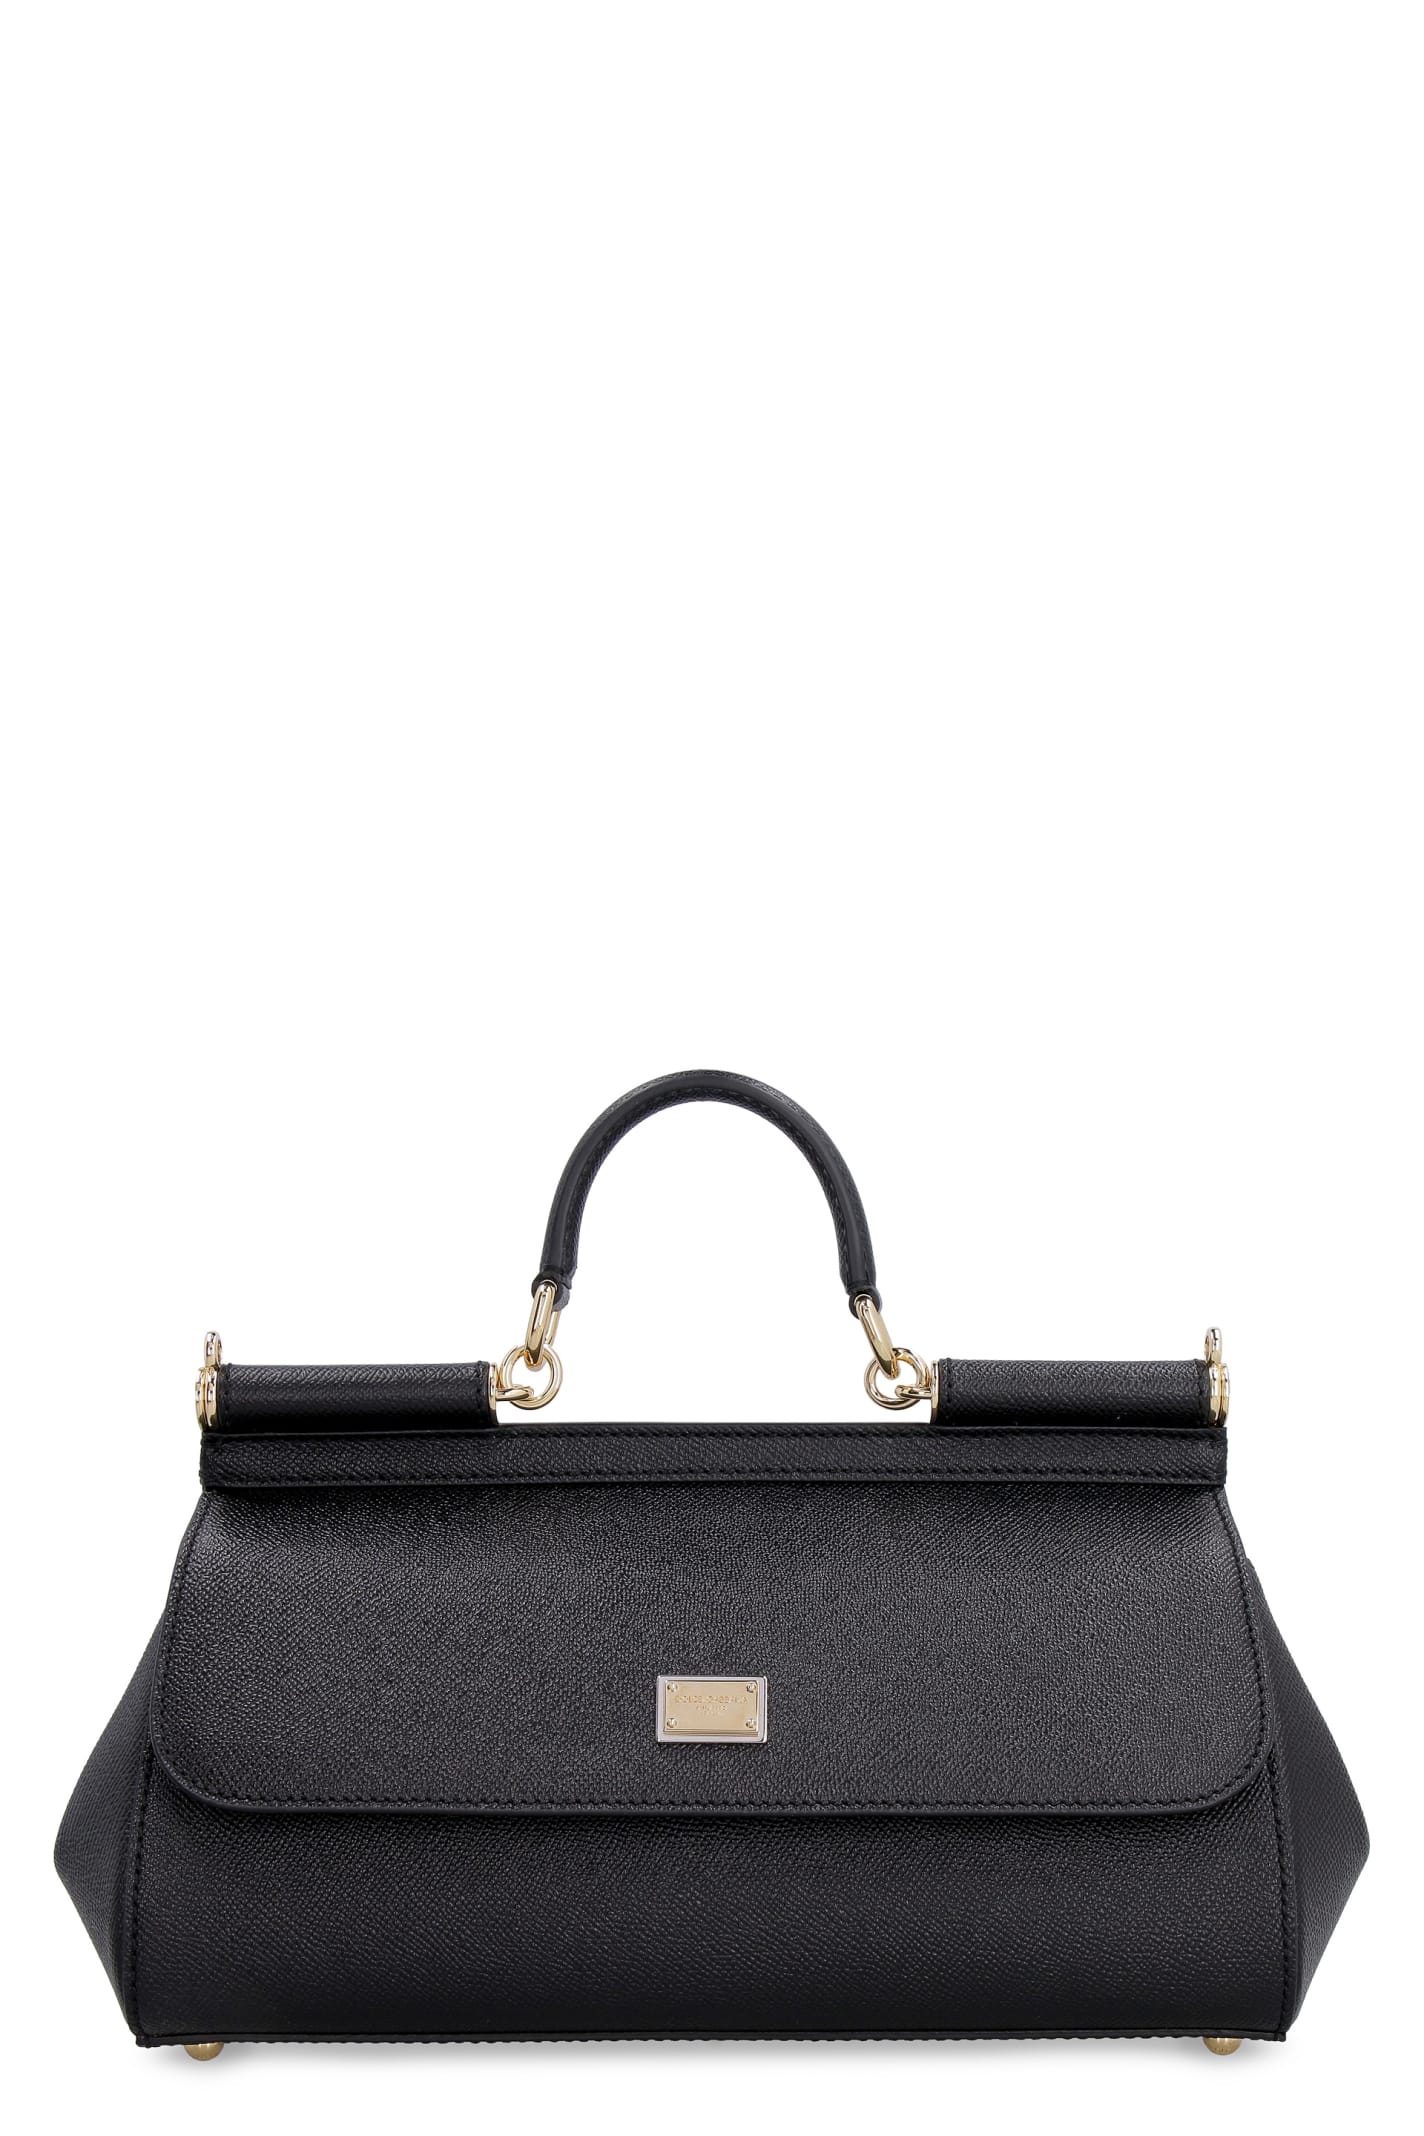 Dolce & Gabbana Sicily Handbag